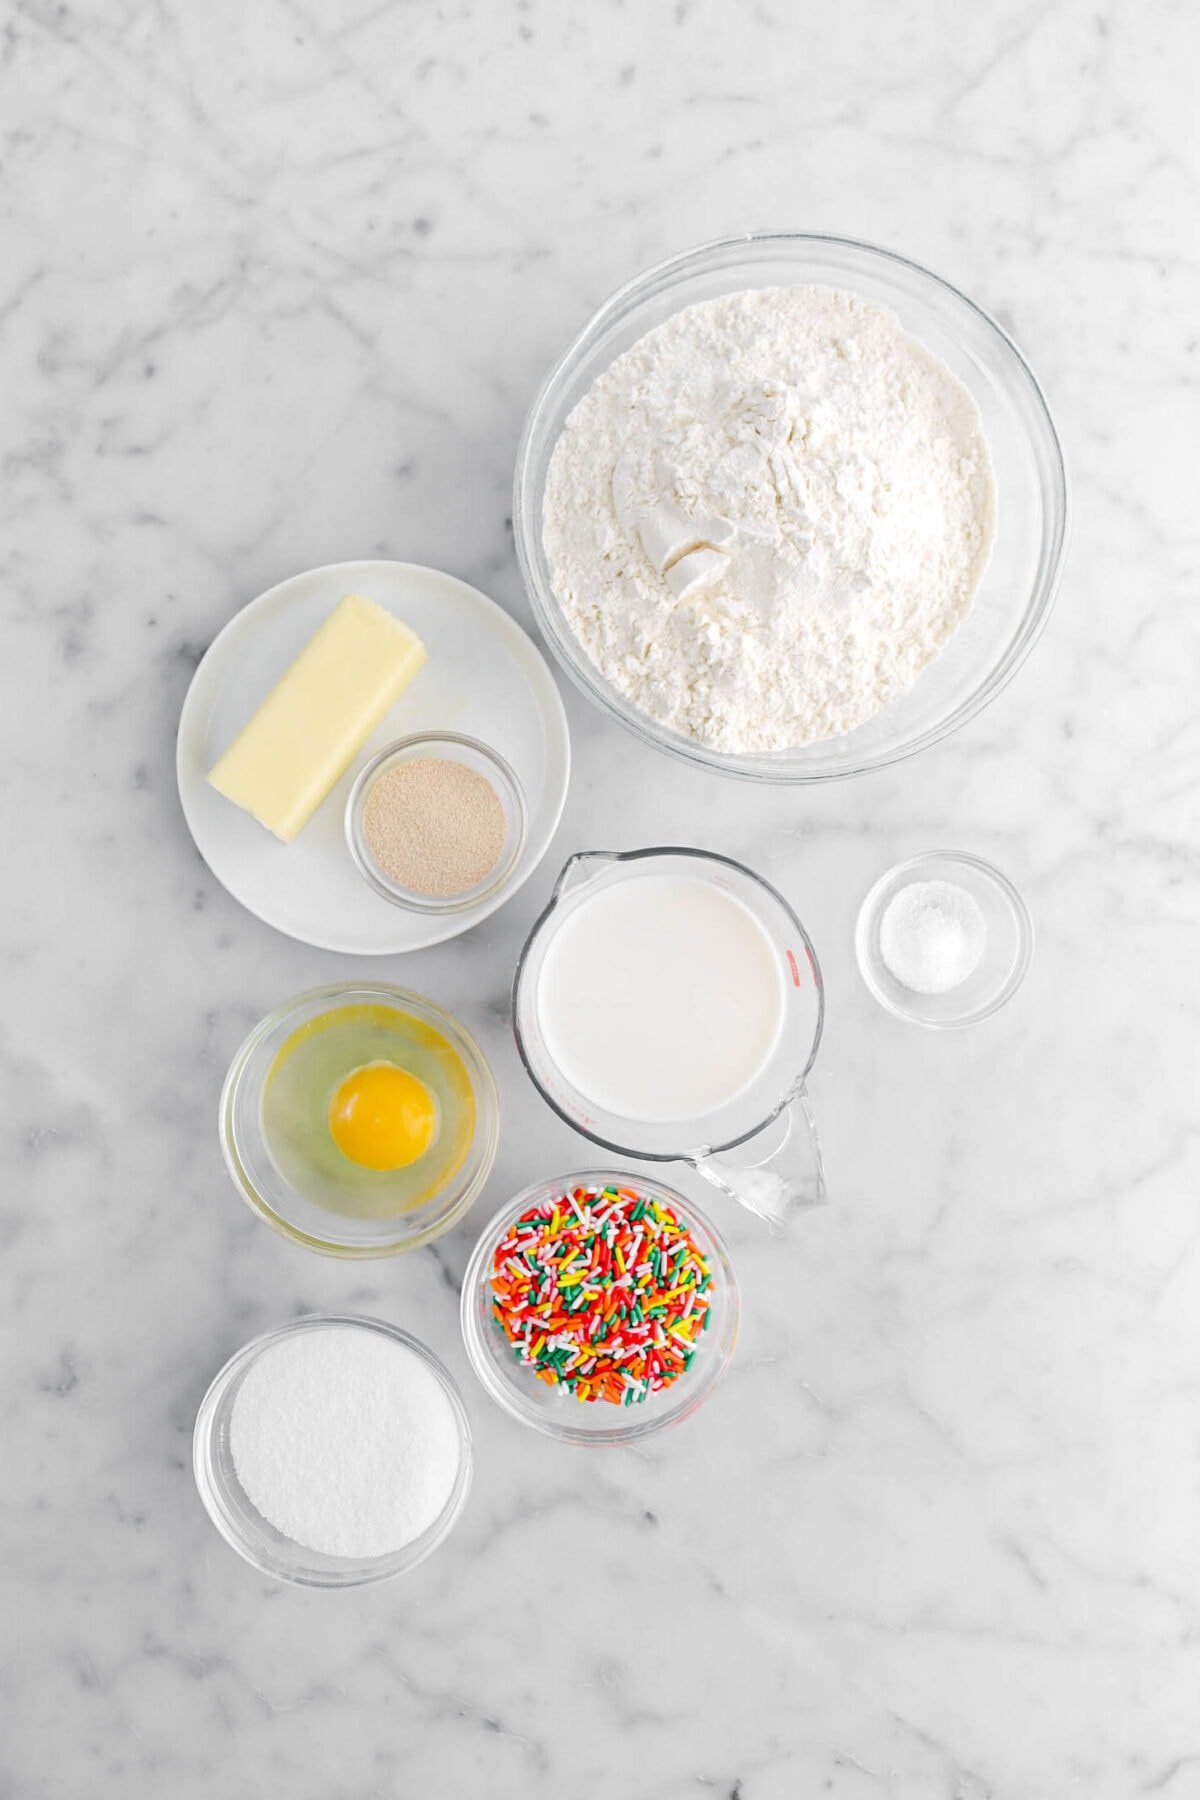 flour, butter, yeast, milk, salt, egg, rainbow sprinkles, and sugar on marble surface.